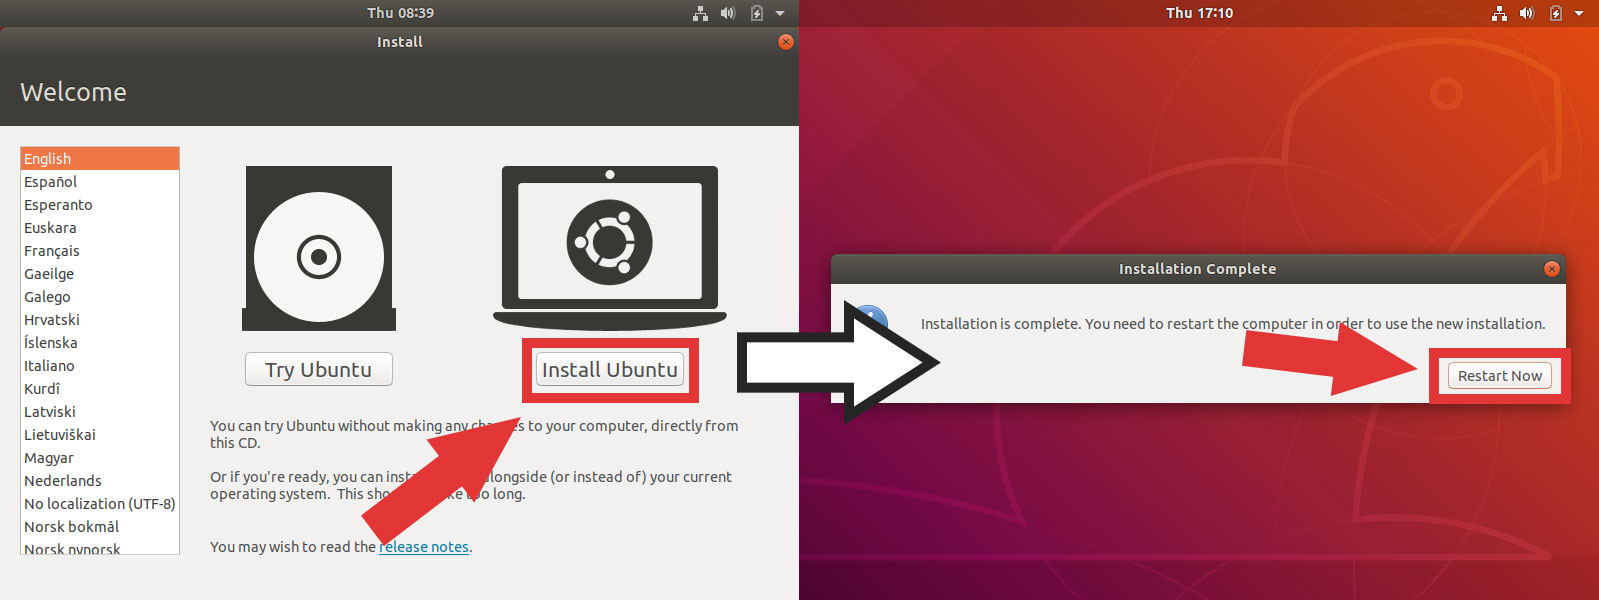 Complete the Ubuntu 18.04 installation wizard and install Ubuntu